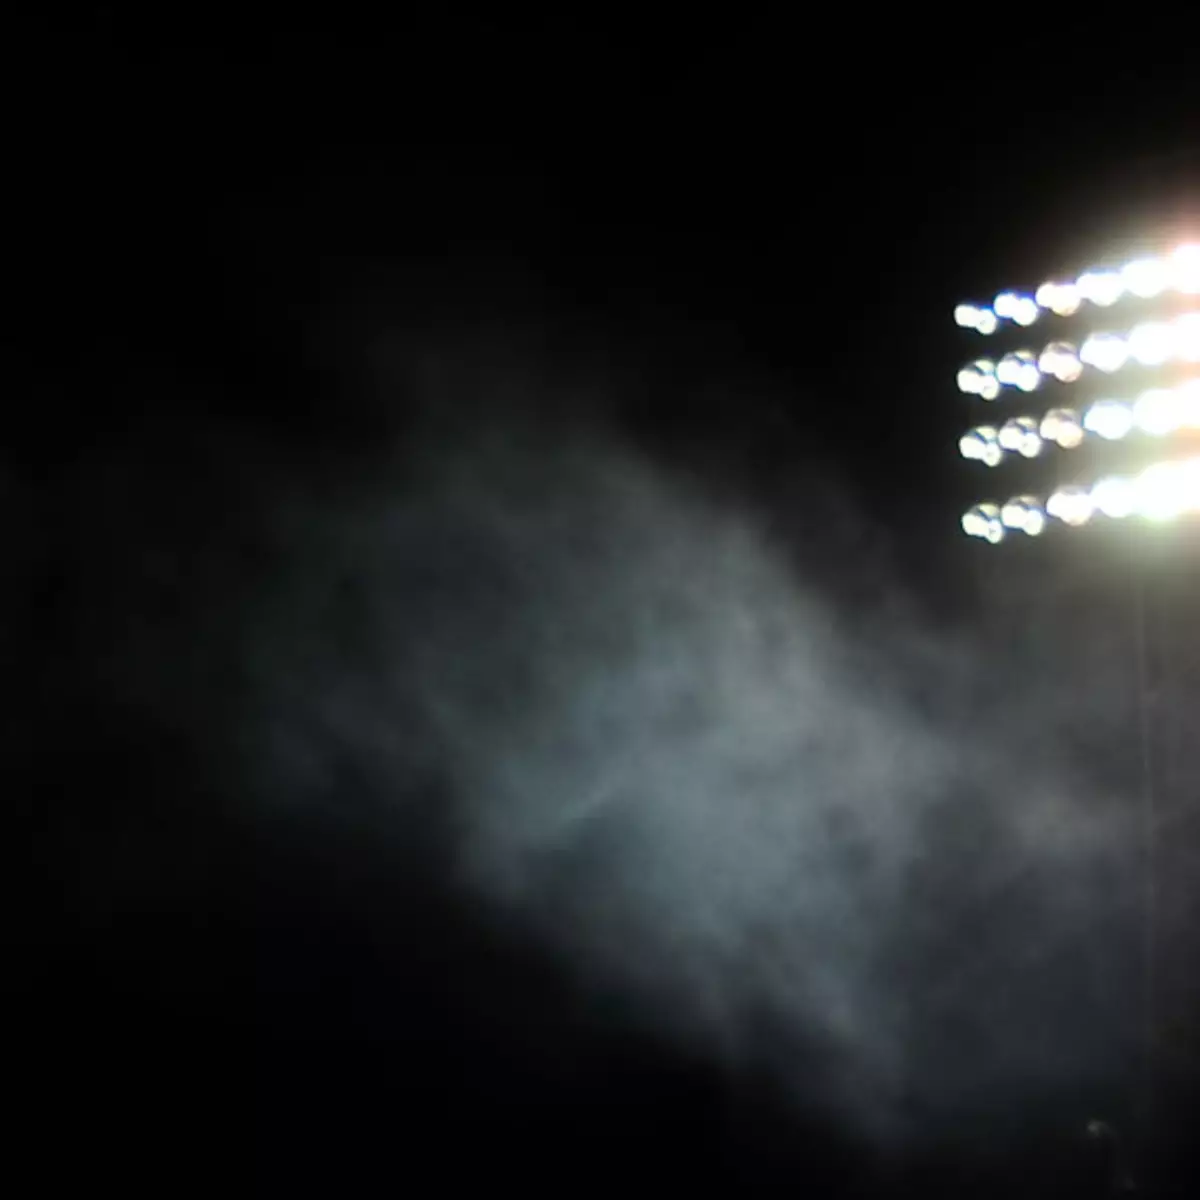 Dark sky with stadium lights shining on the right side.